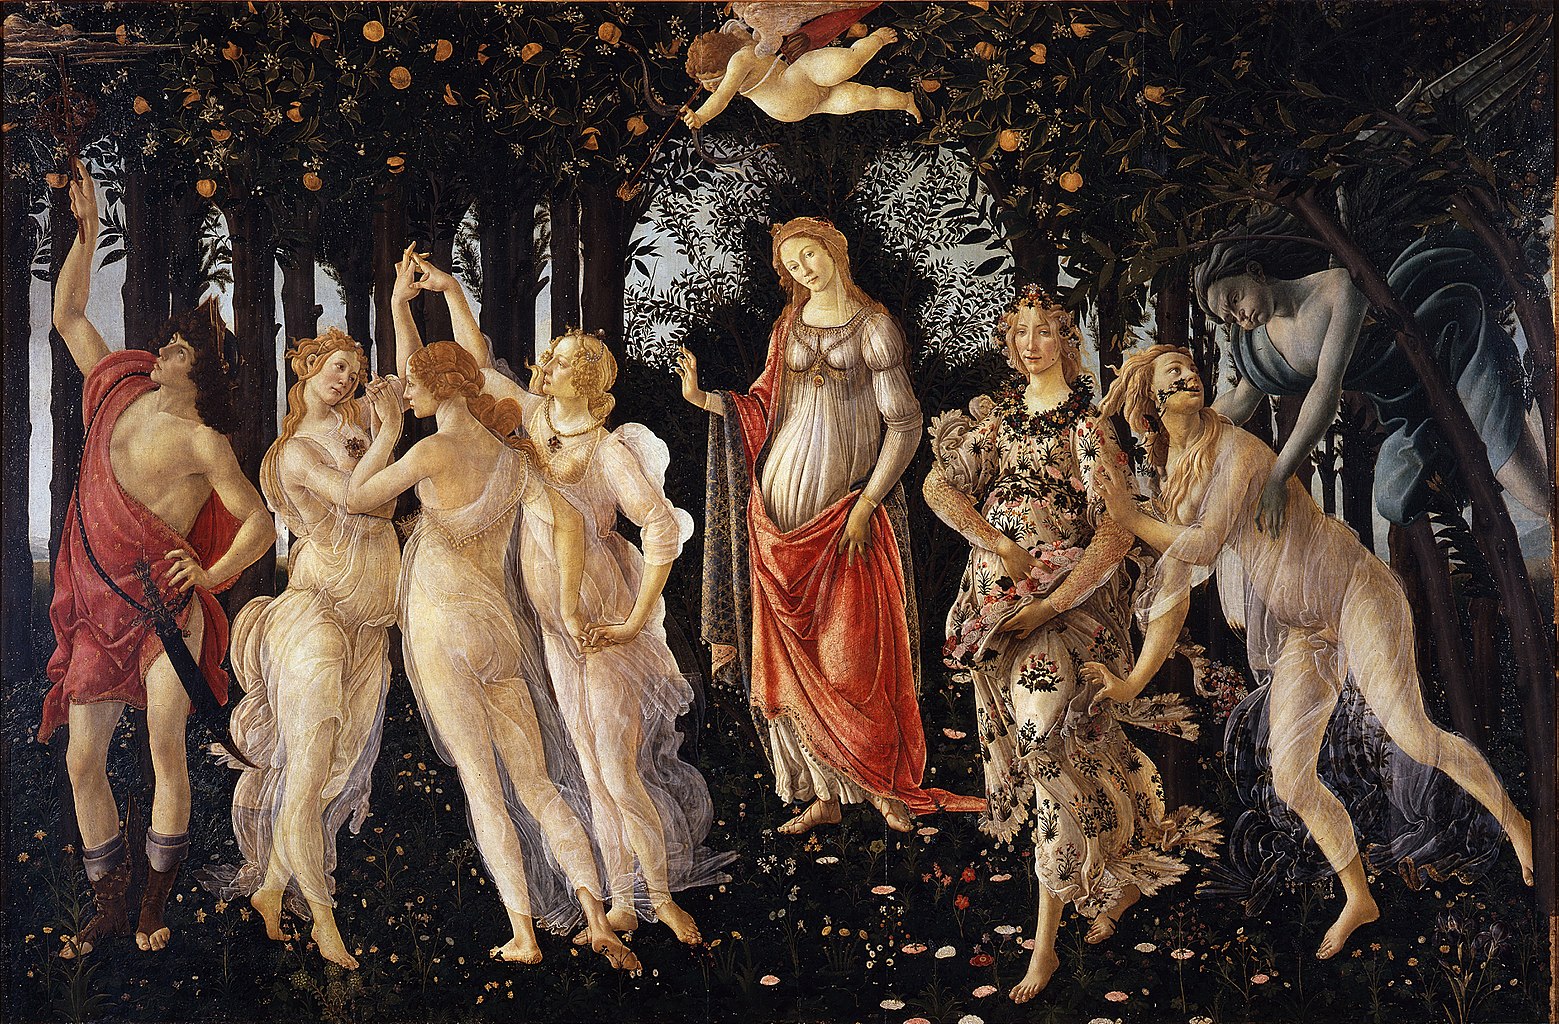 La Primavera, painting by Sandro Botticelli